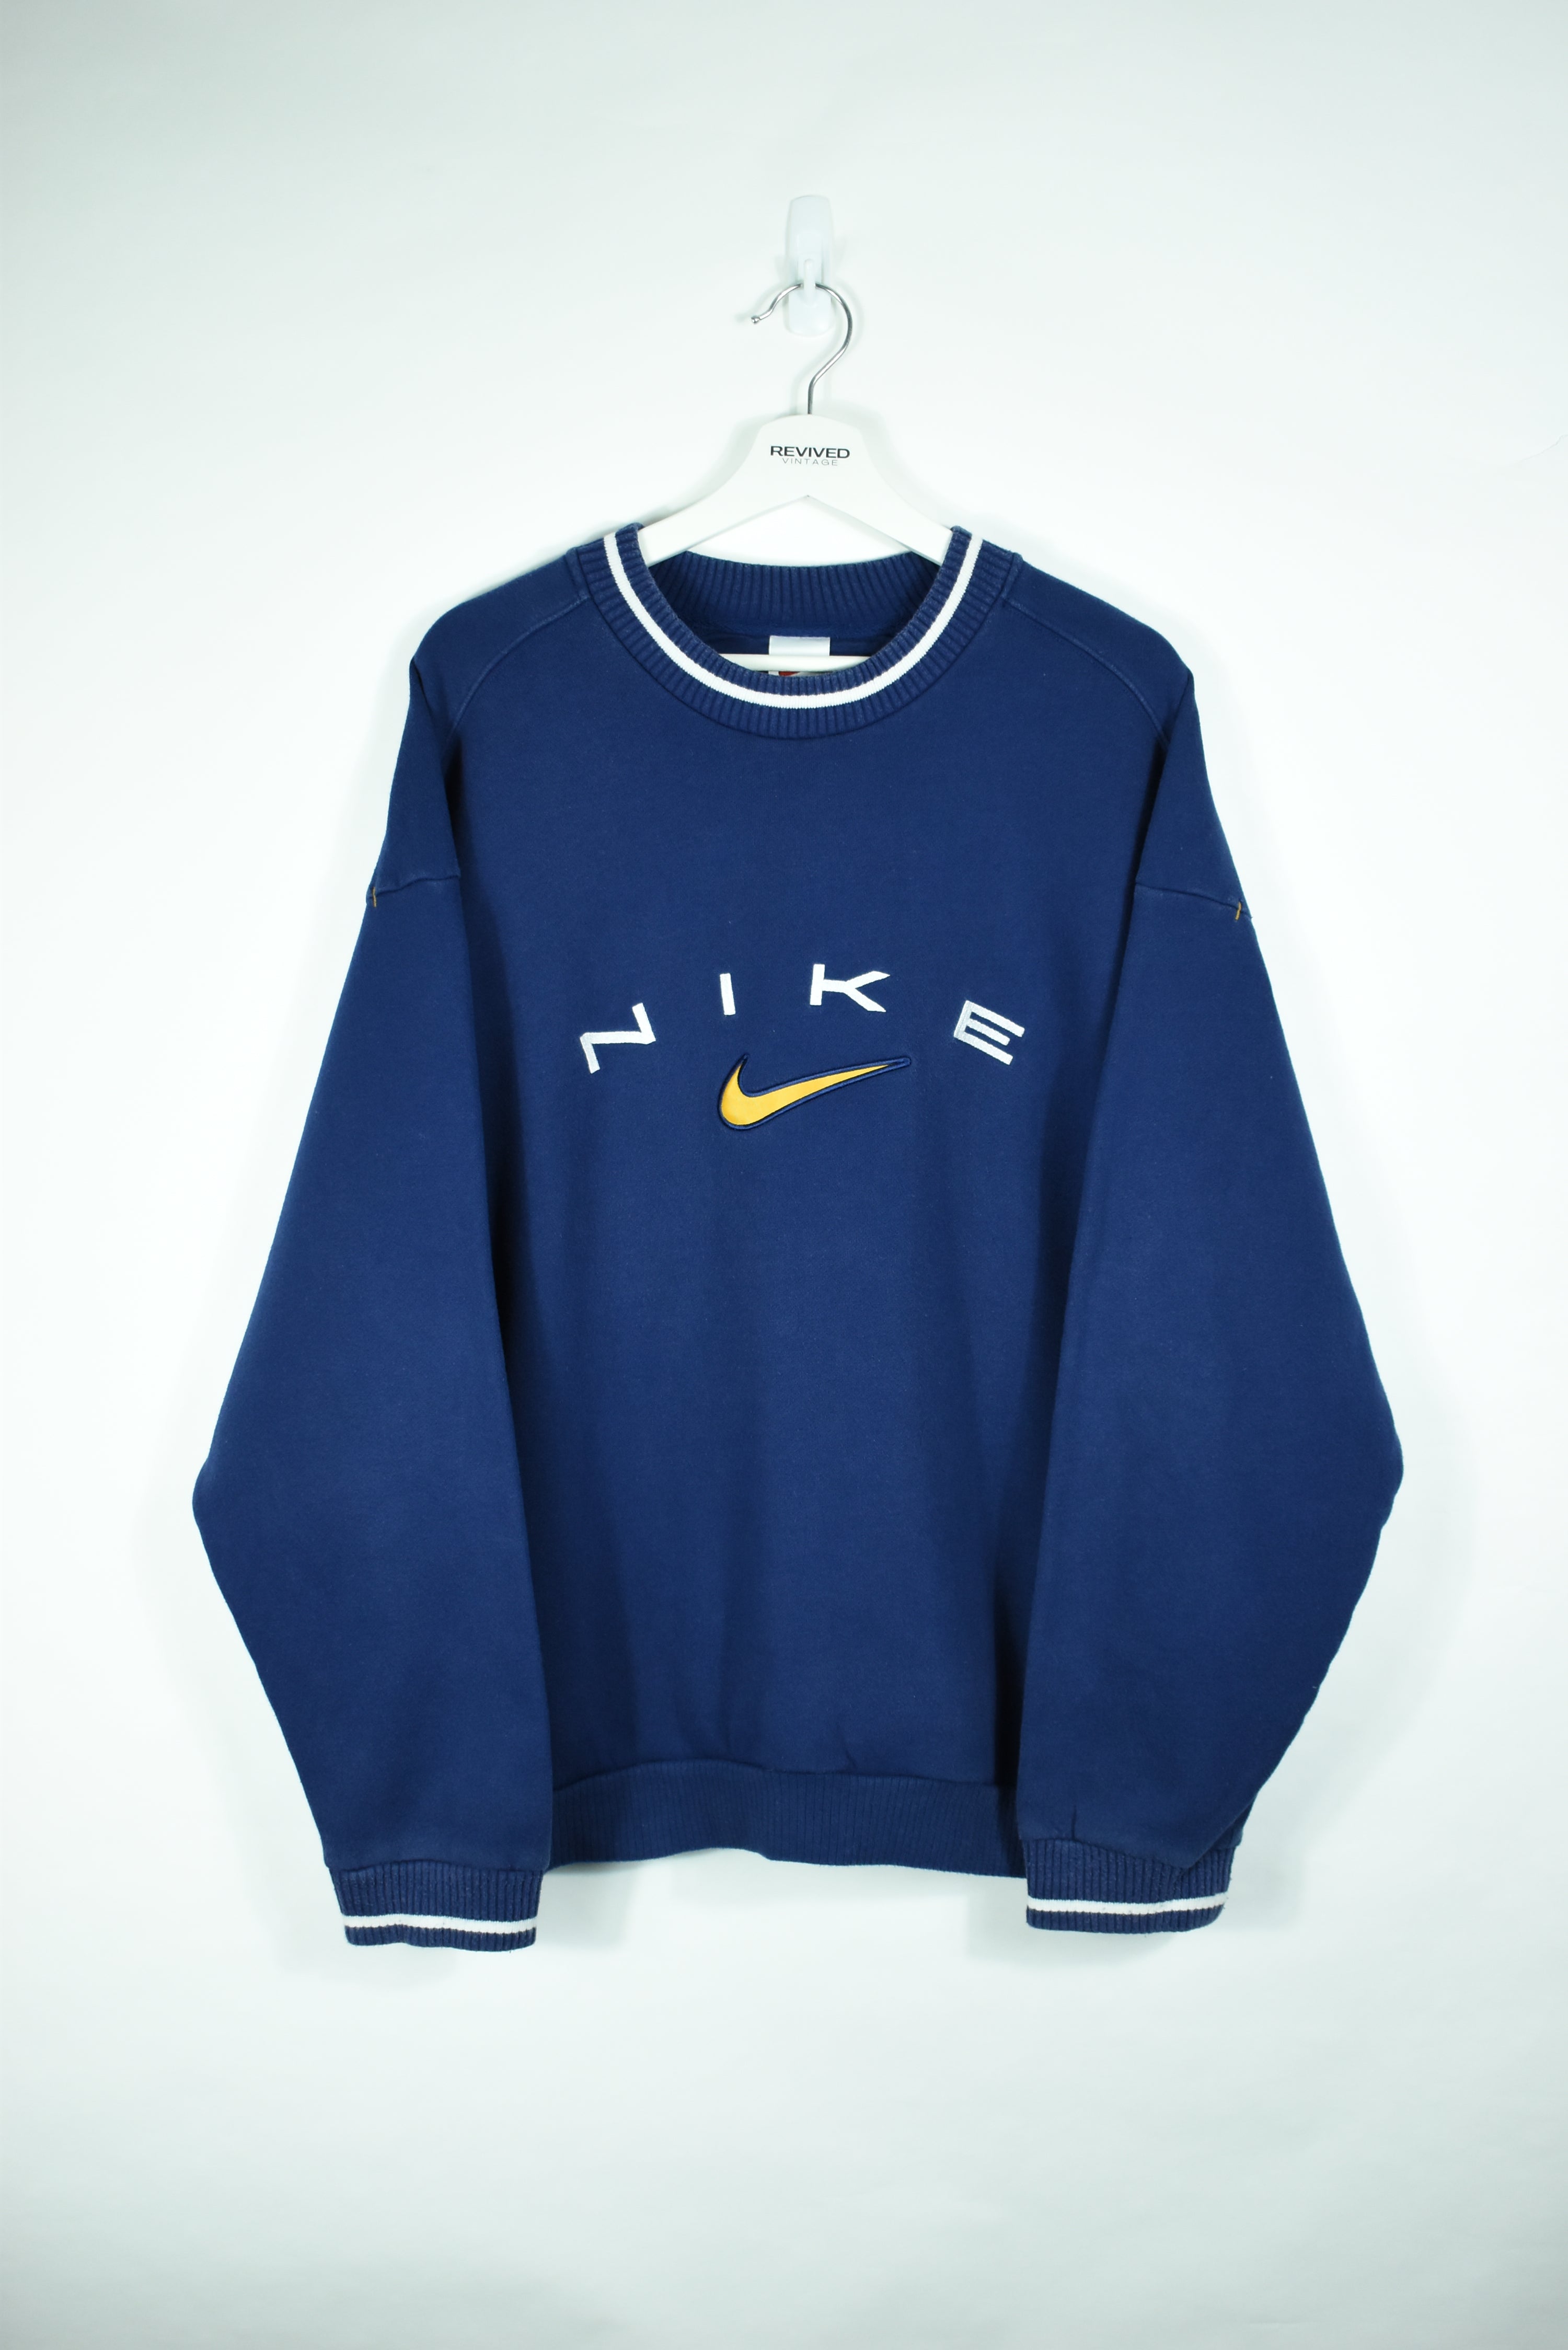 Vintage RARE Nike Embroidery Sweatshirt LARGE (Baggy)